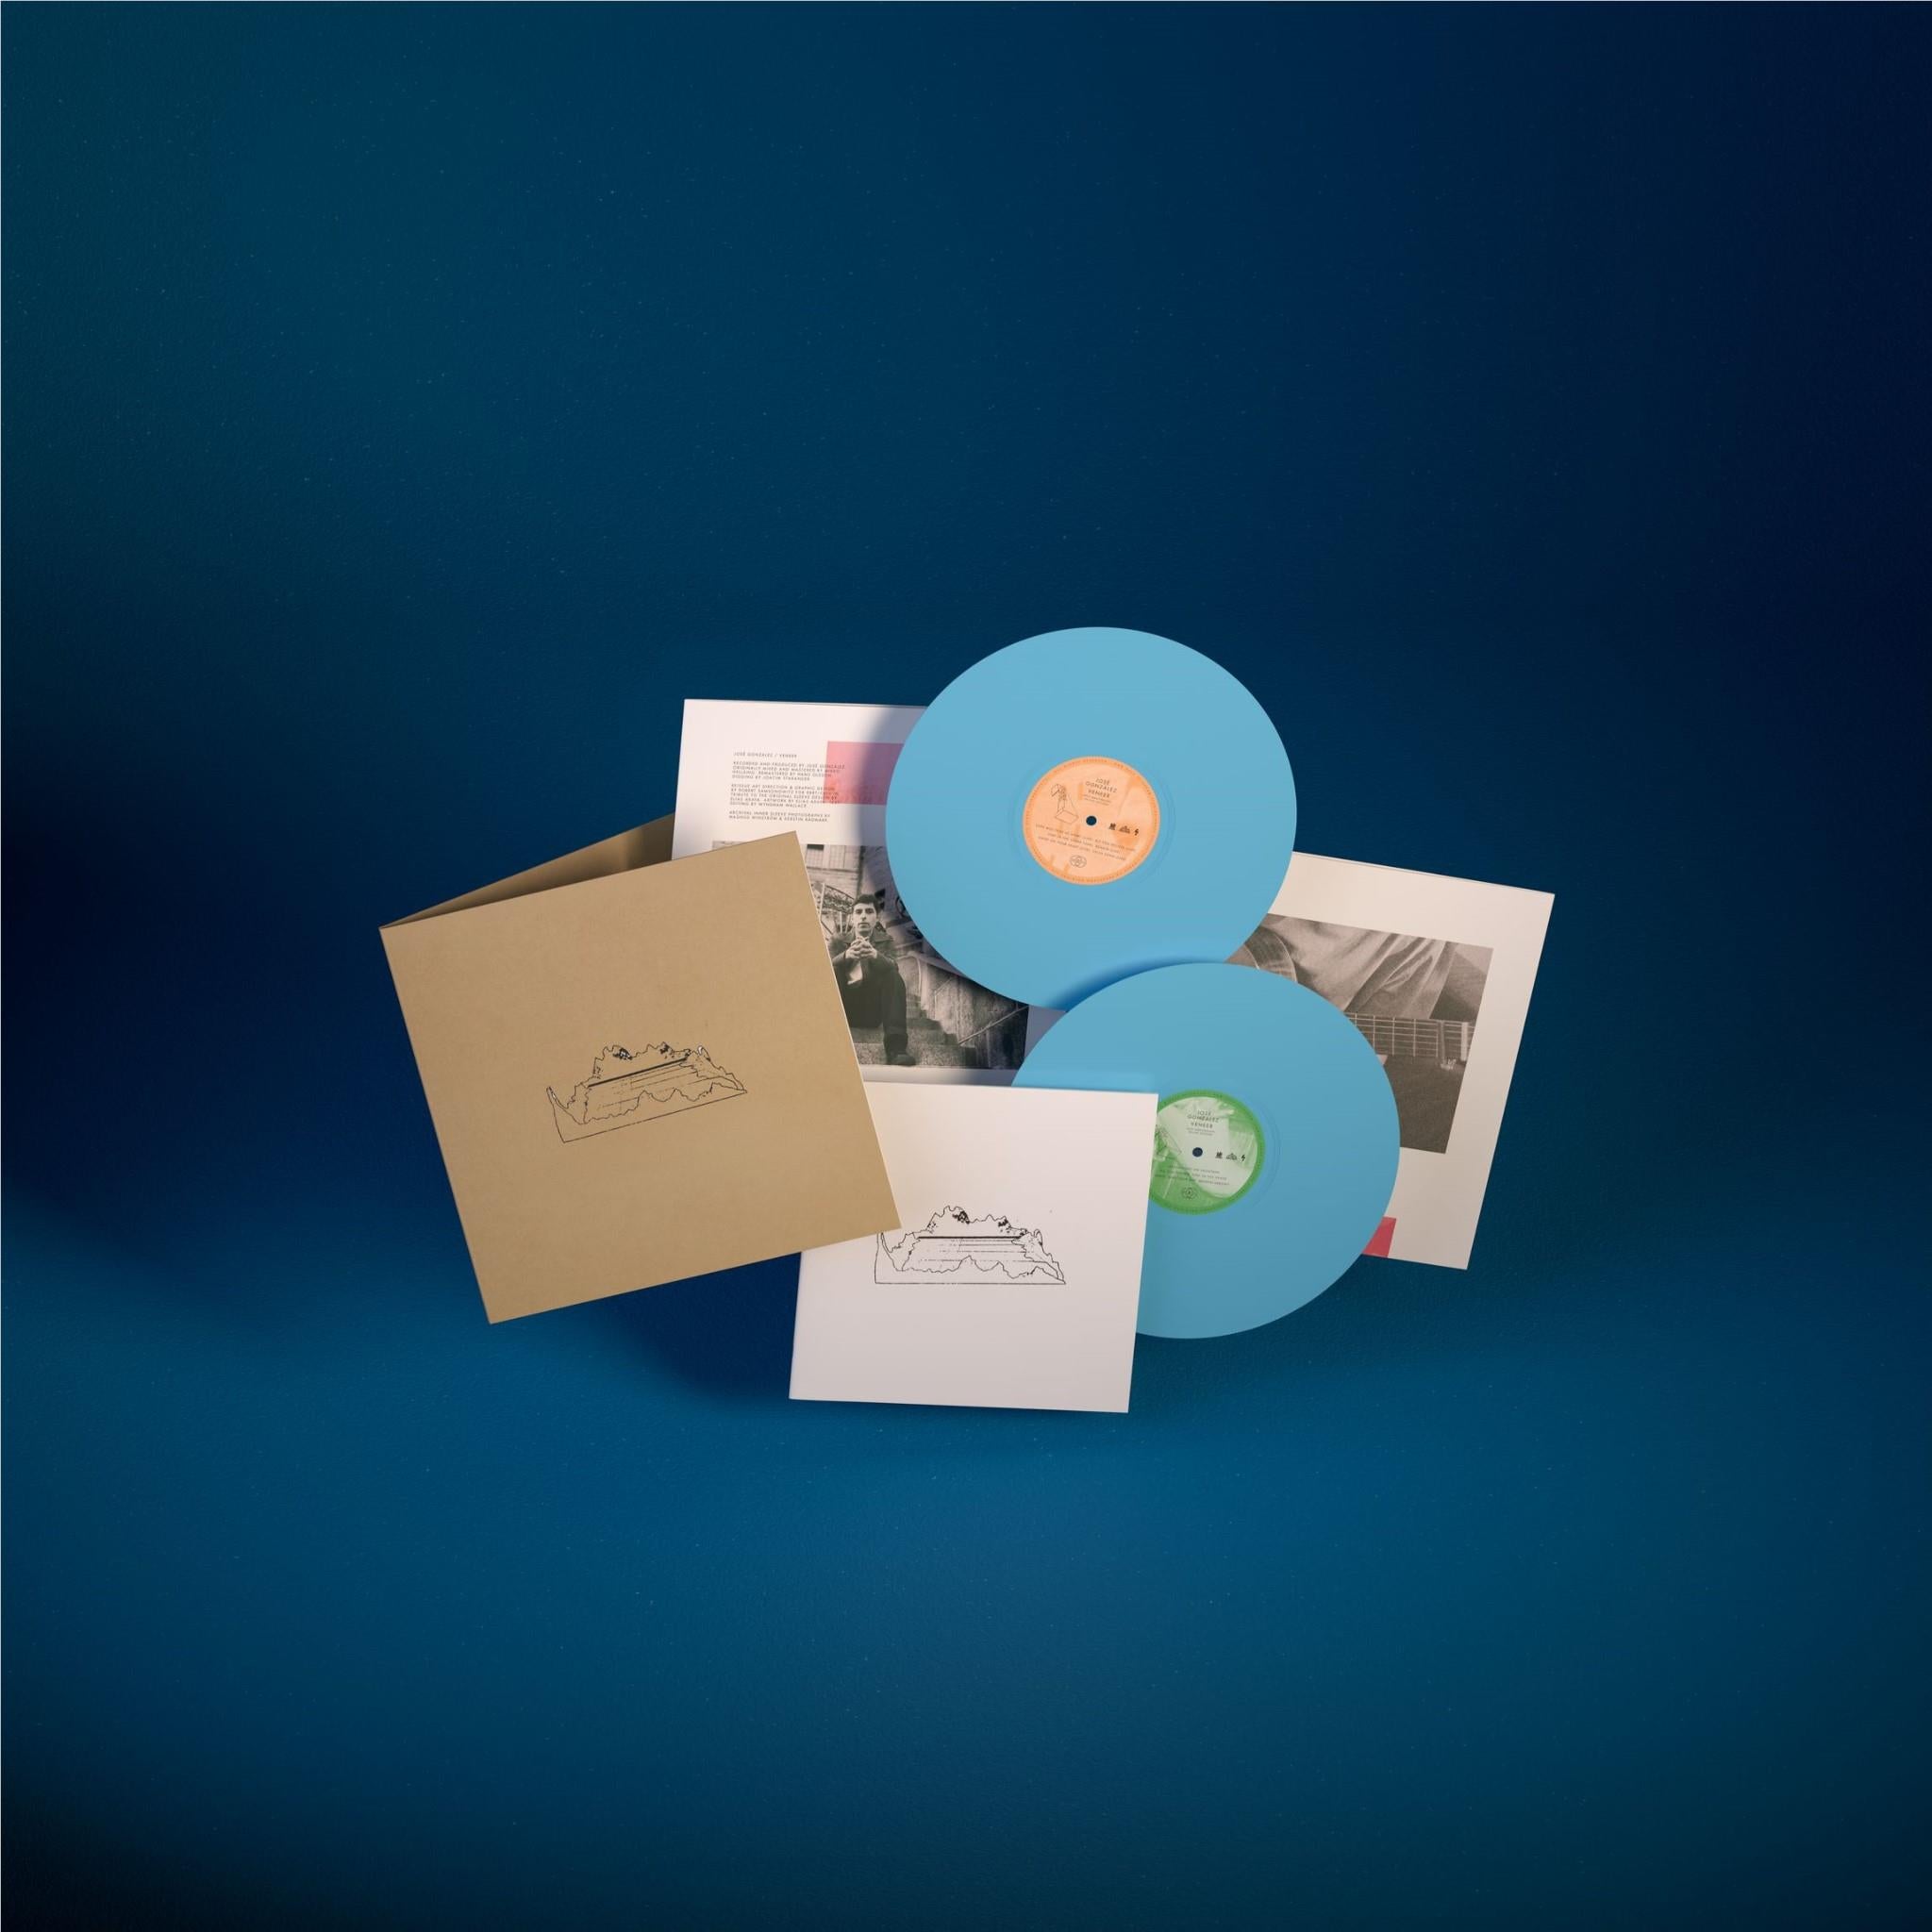 veneer (20th anniversary edition blue vinyl)